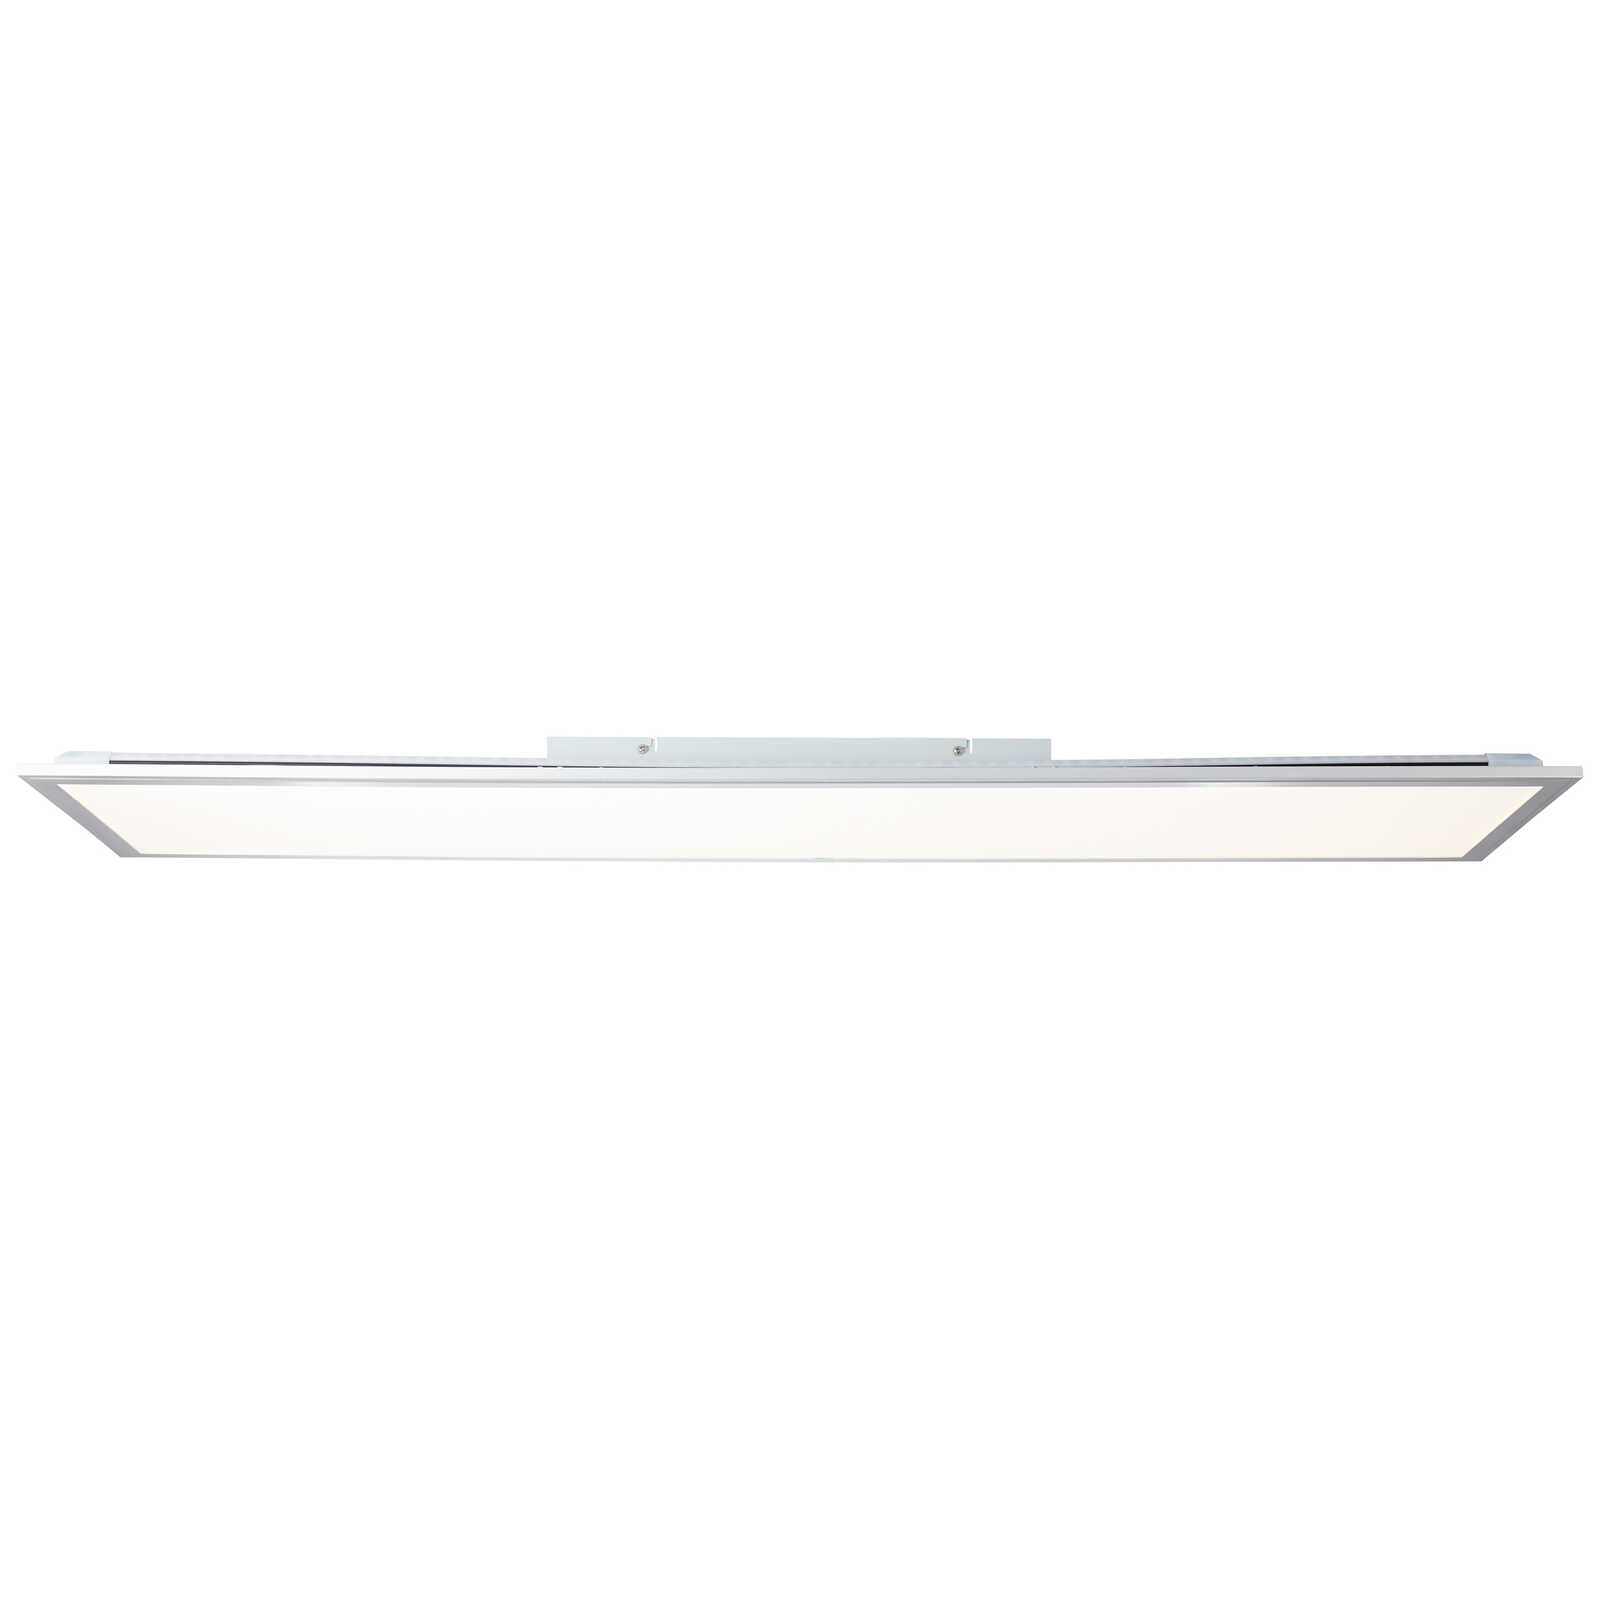             Metal ceiling light - Alba 3 - silver, white
        